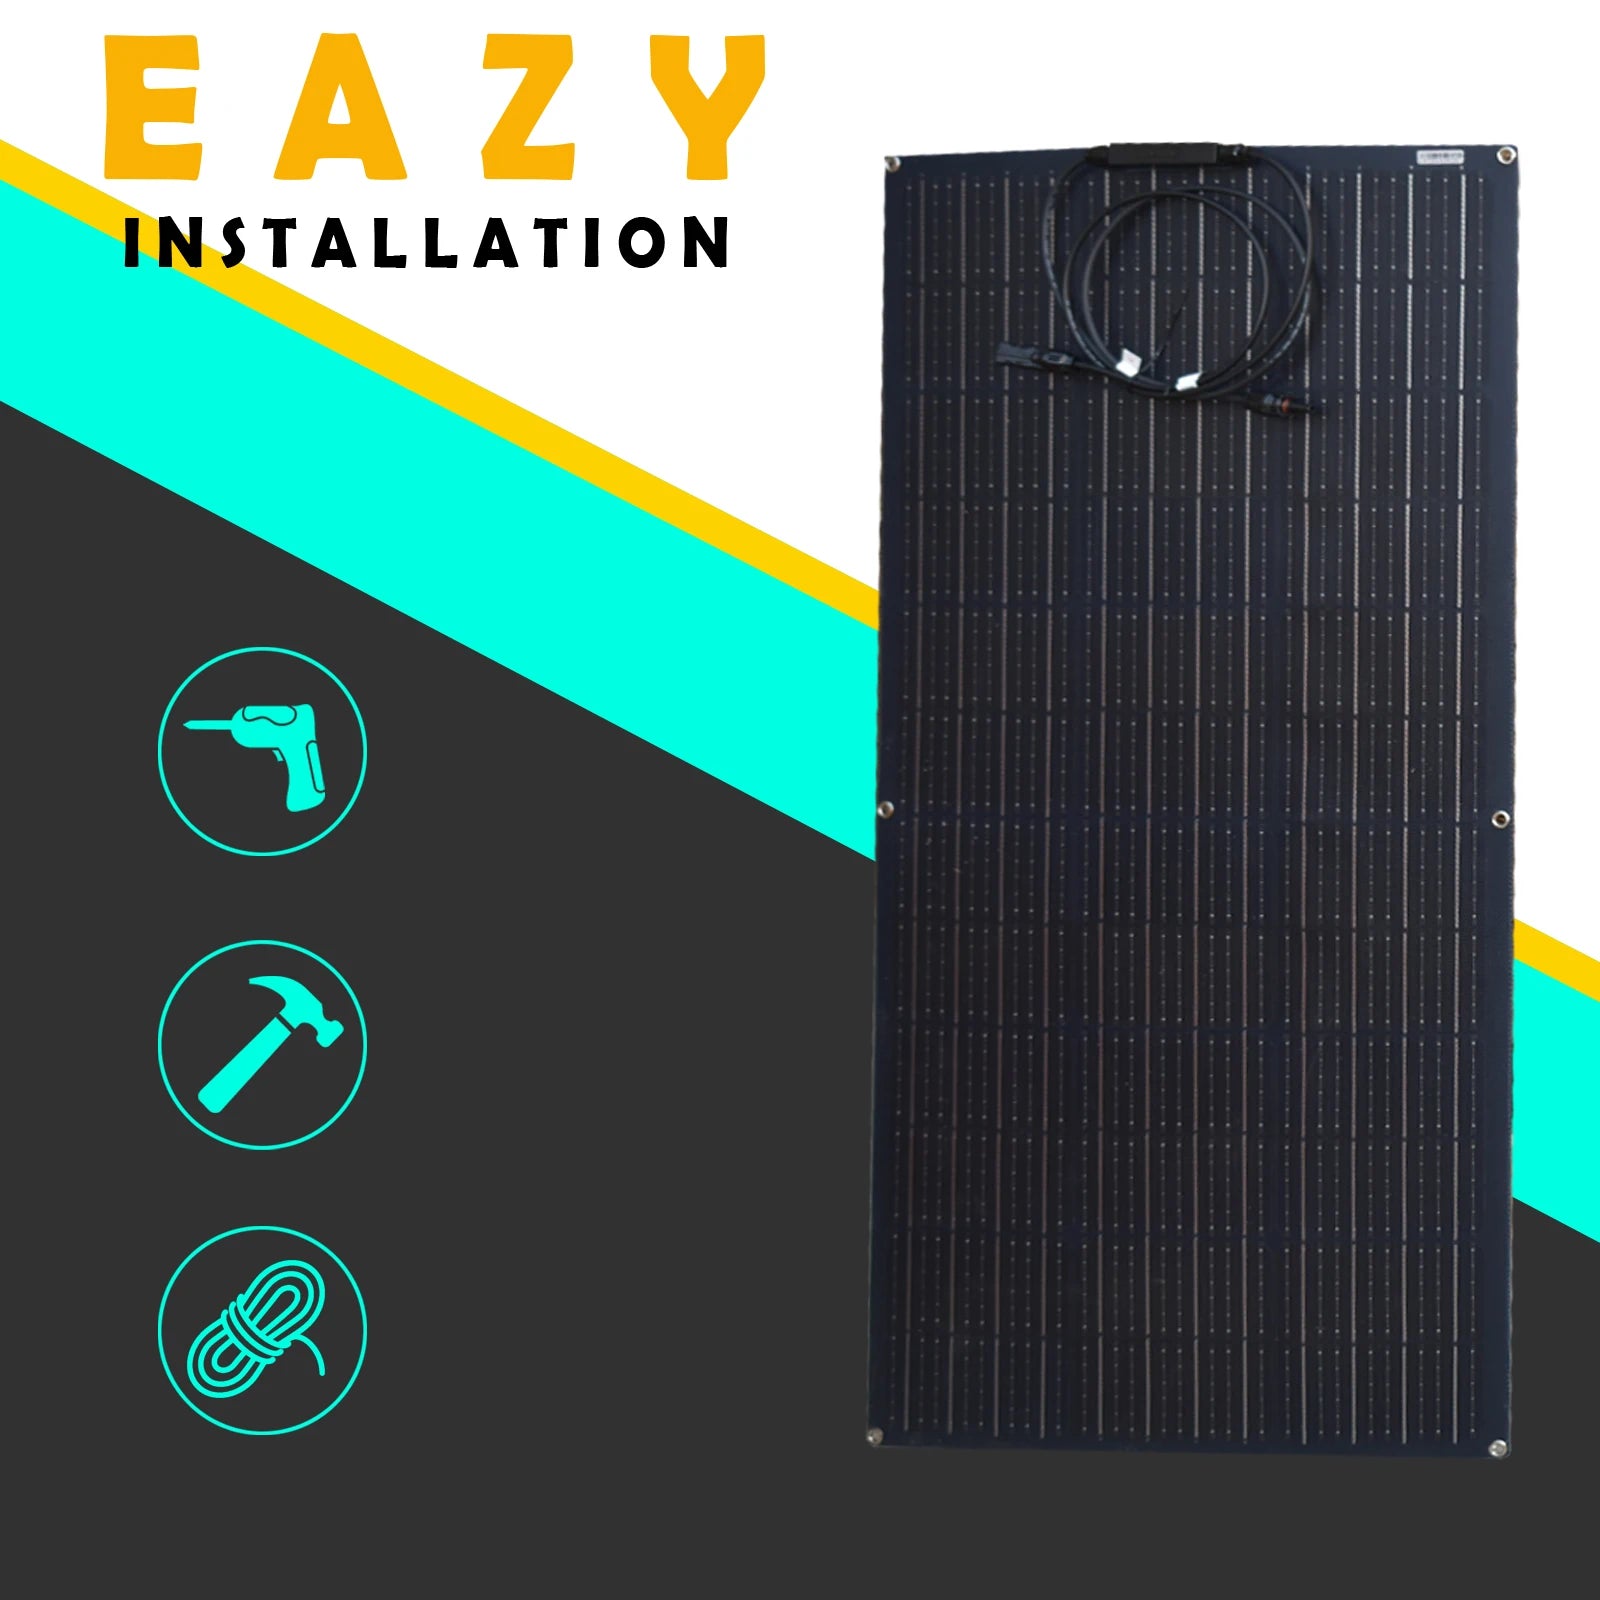 JINGYANG long lasting Semi Flexible solar panel, Photovoltaic module specifications: monocrystalline silicon, 100W max power.